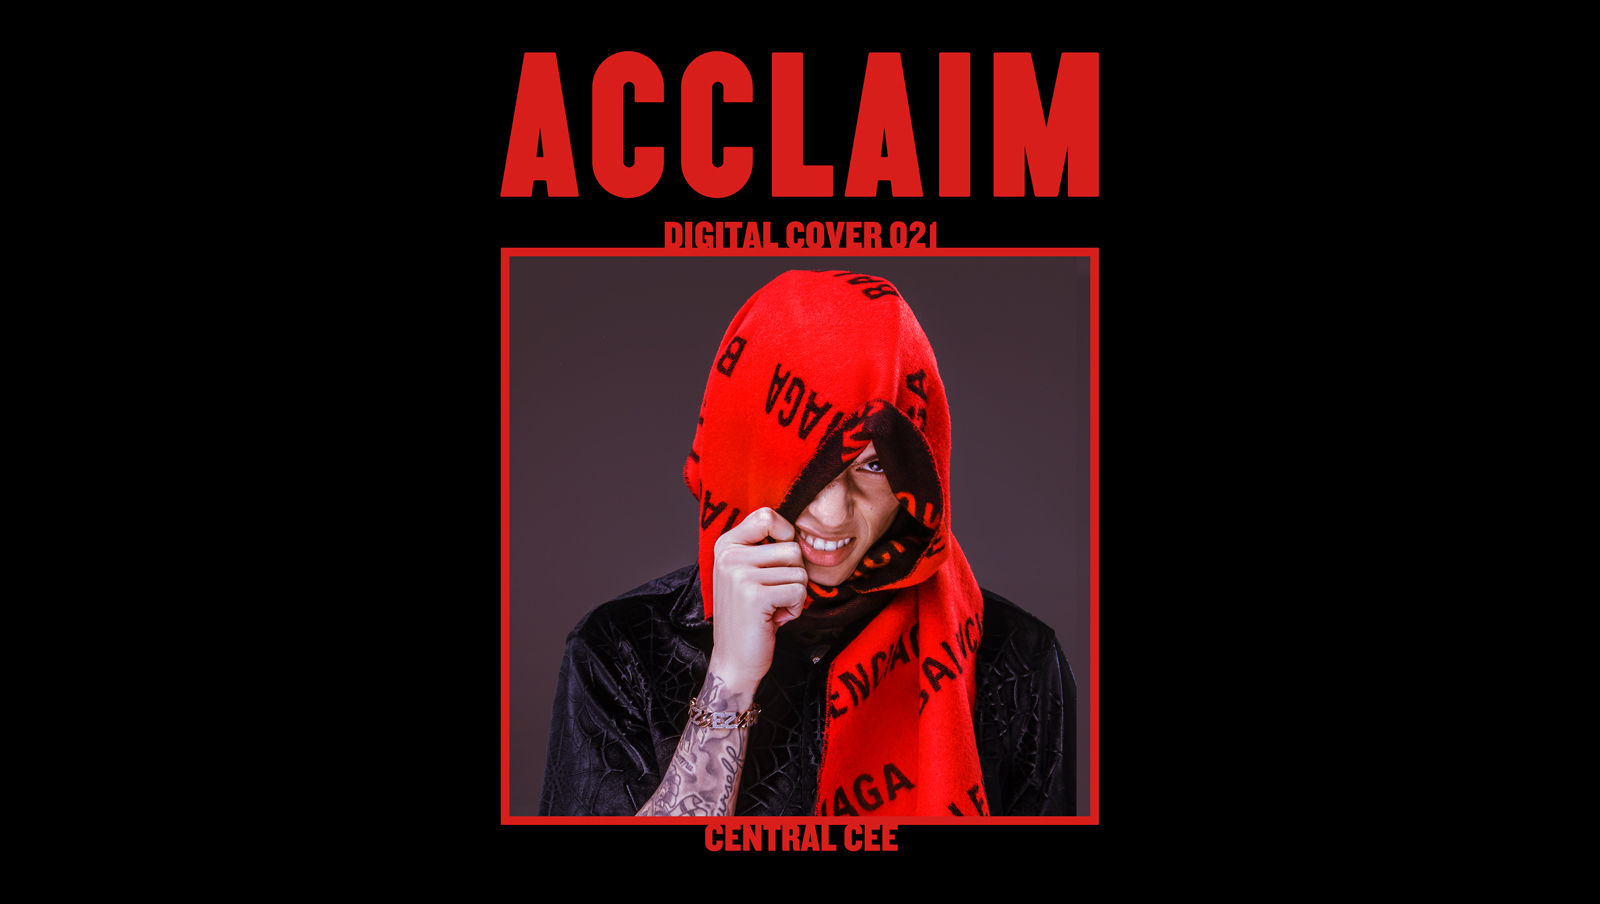 Acclaim Digital Cover 021: Central Cee — Acclaim Magazine